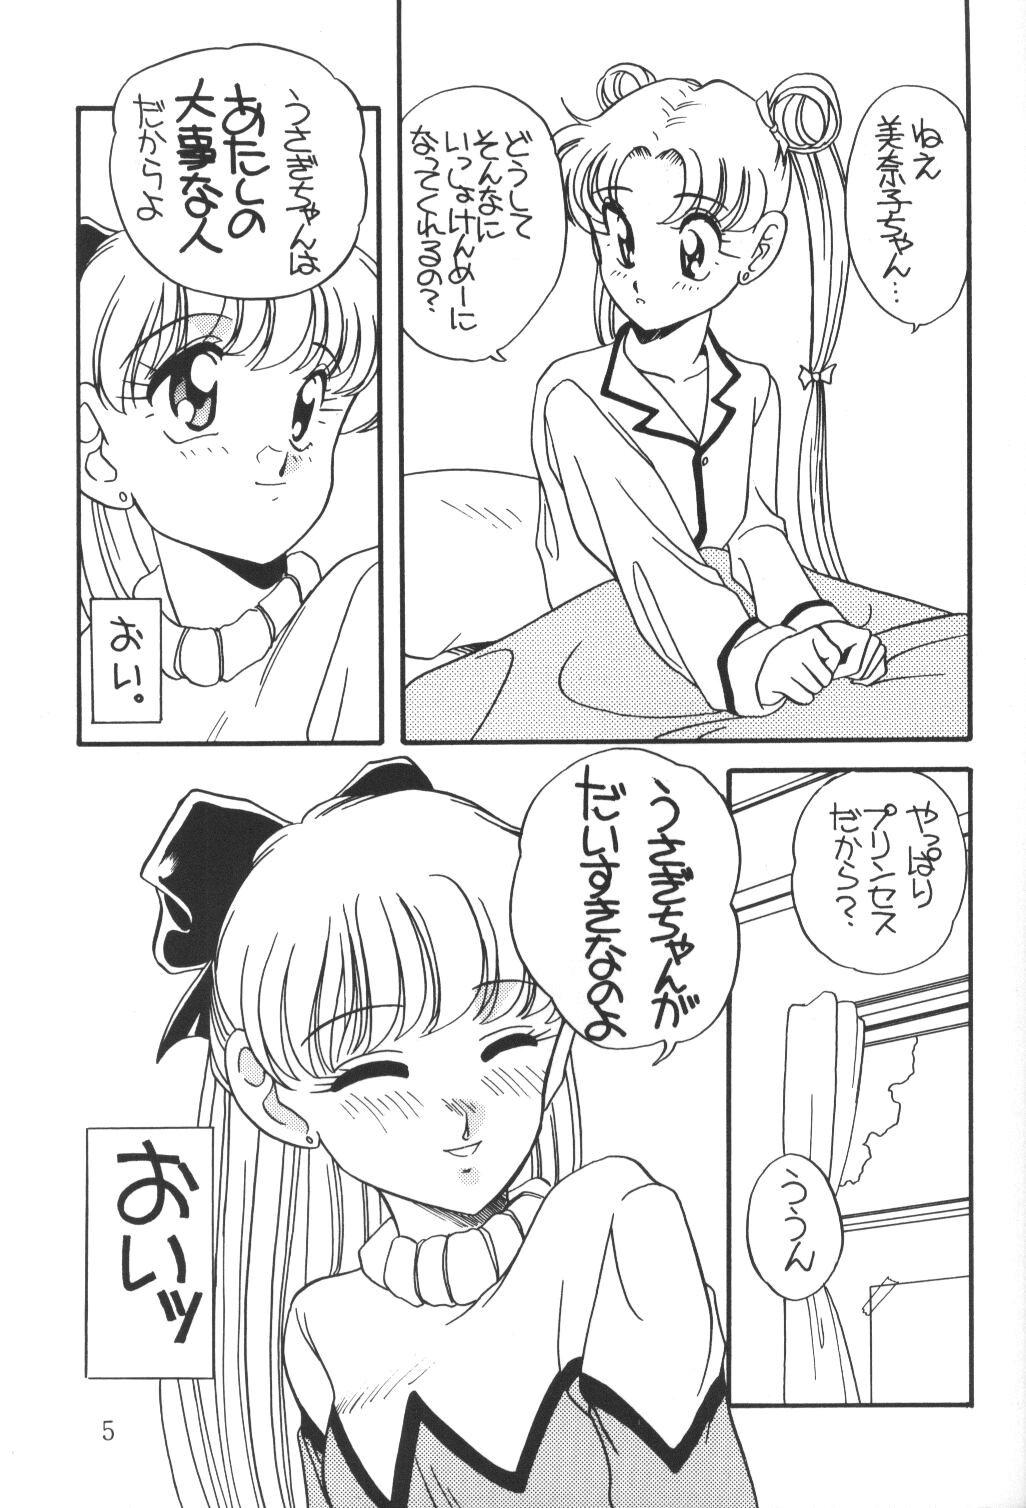 Parties Elfin 9 - Sailor moon Amatures Gone Wild - Page 4